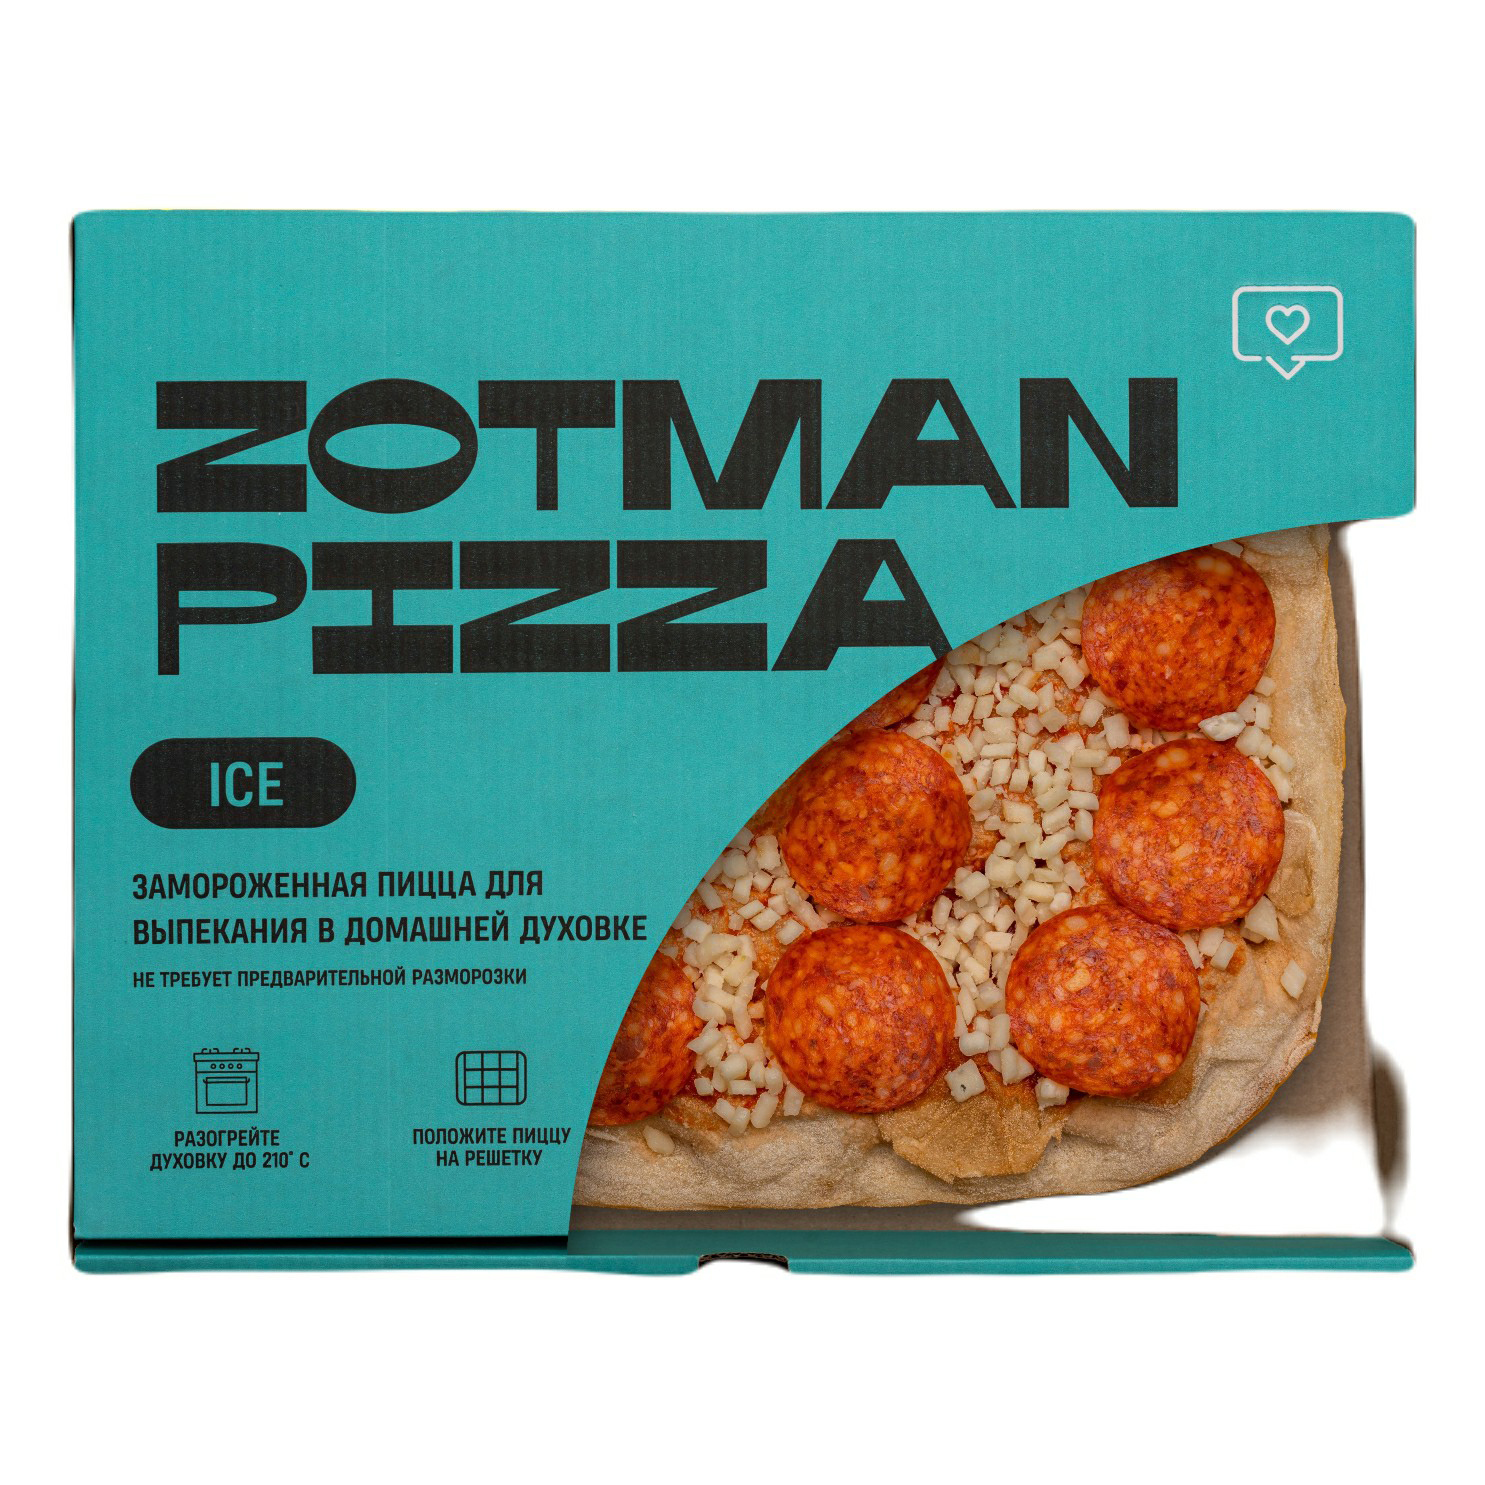 Зотман пепперони. Пицца Zotman Ice. Пицца Зотман замороженная. Zotman pizza Баварская. Zotman пепперони.